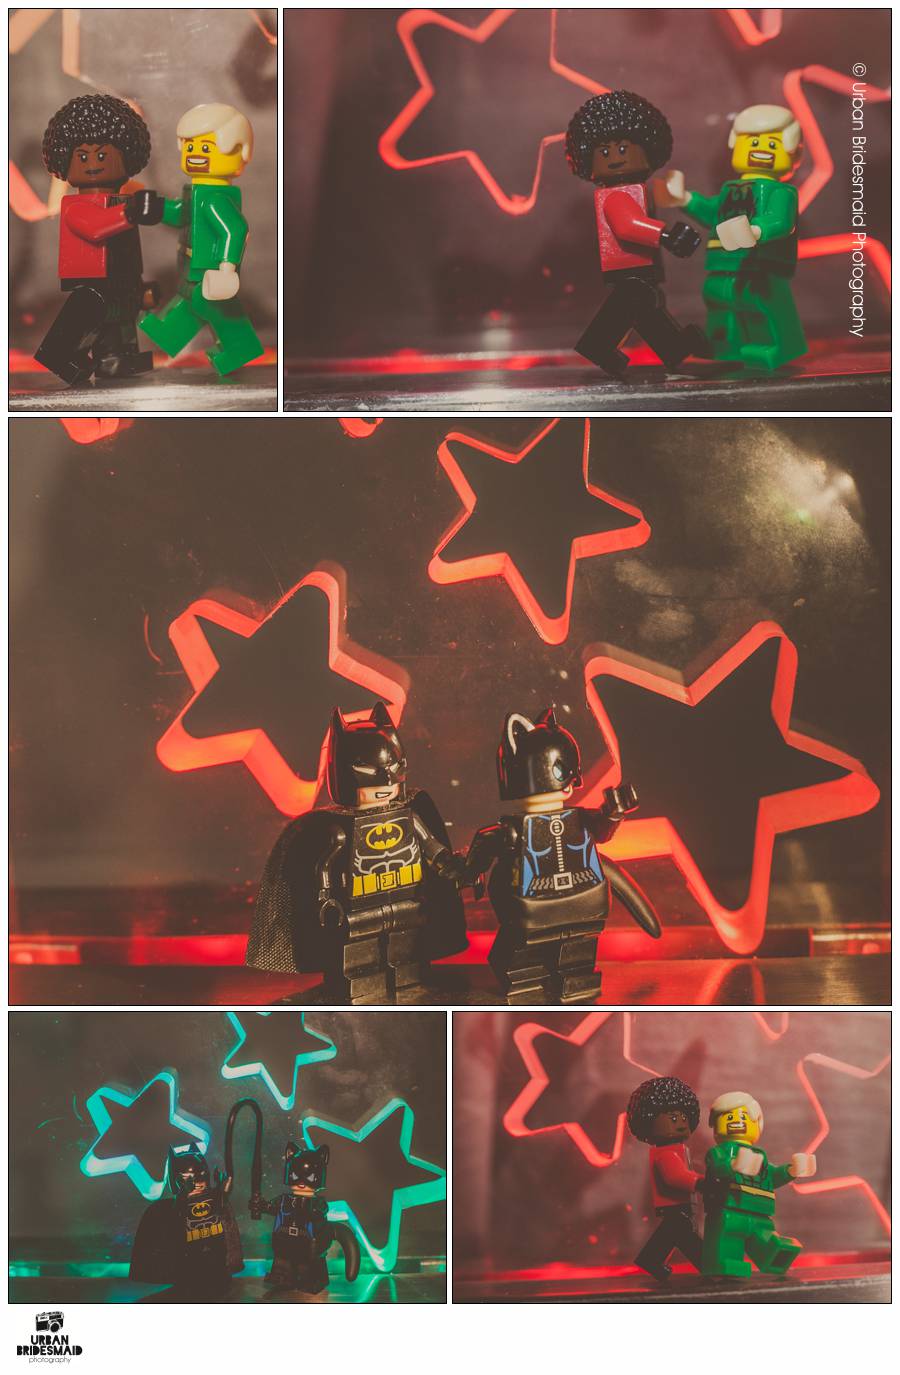 19-Lego-Minifig-Jessica-Jones-Luke-Cage-wedding-London-Urban-Bridesmaid-Photography Superhero Destination Wedding with Lego figures and minifigs